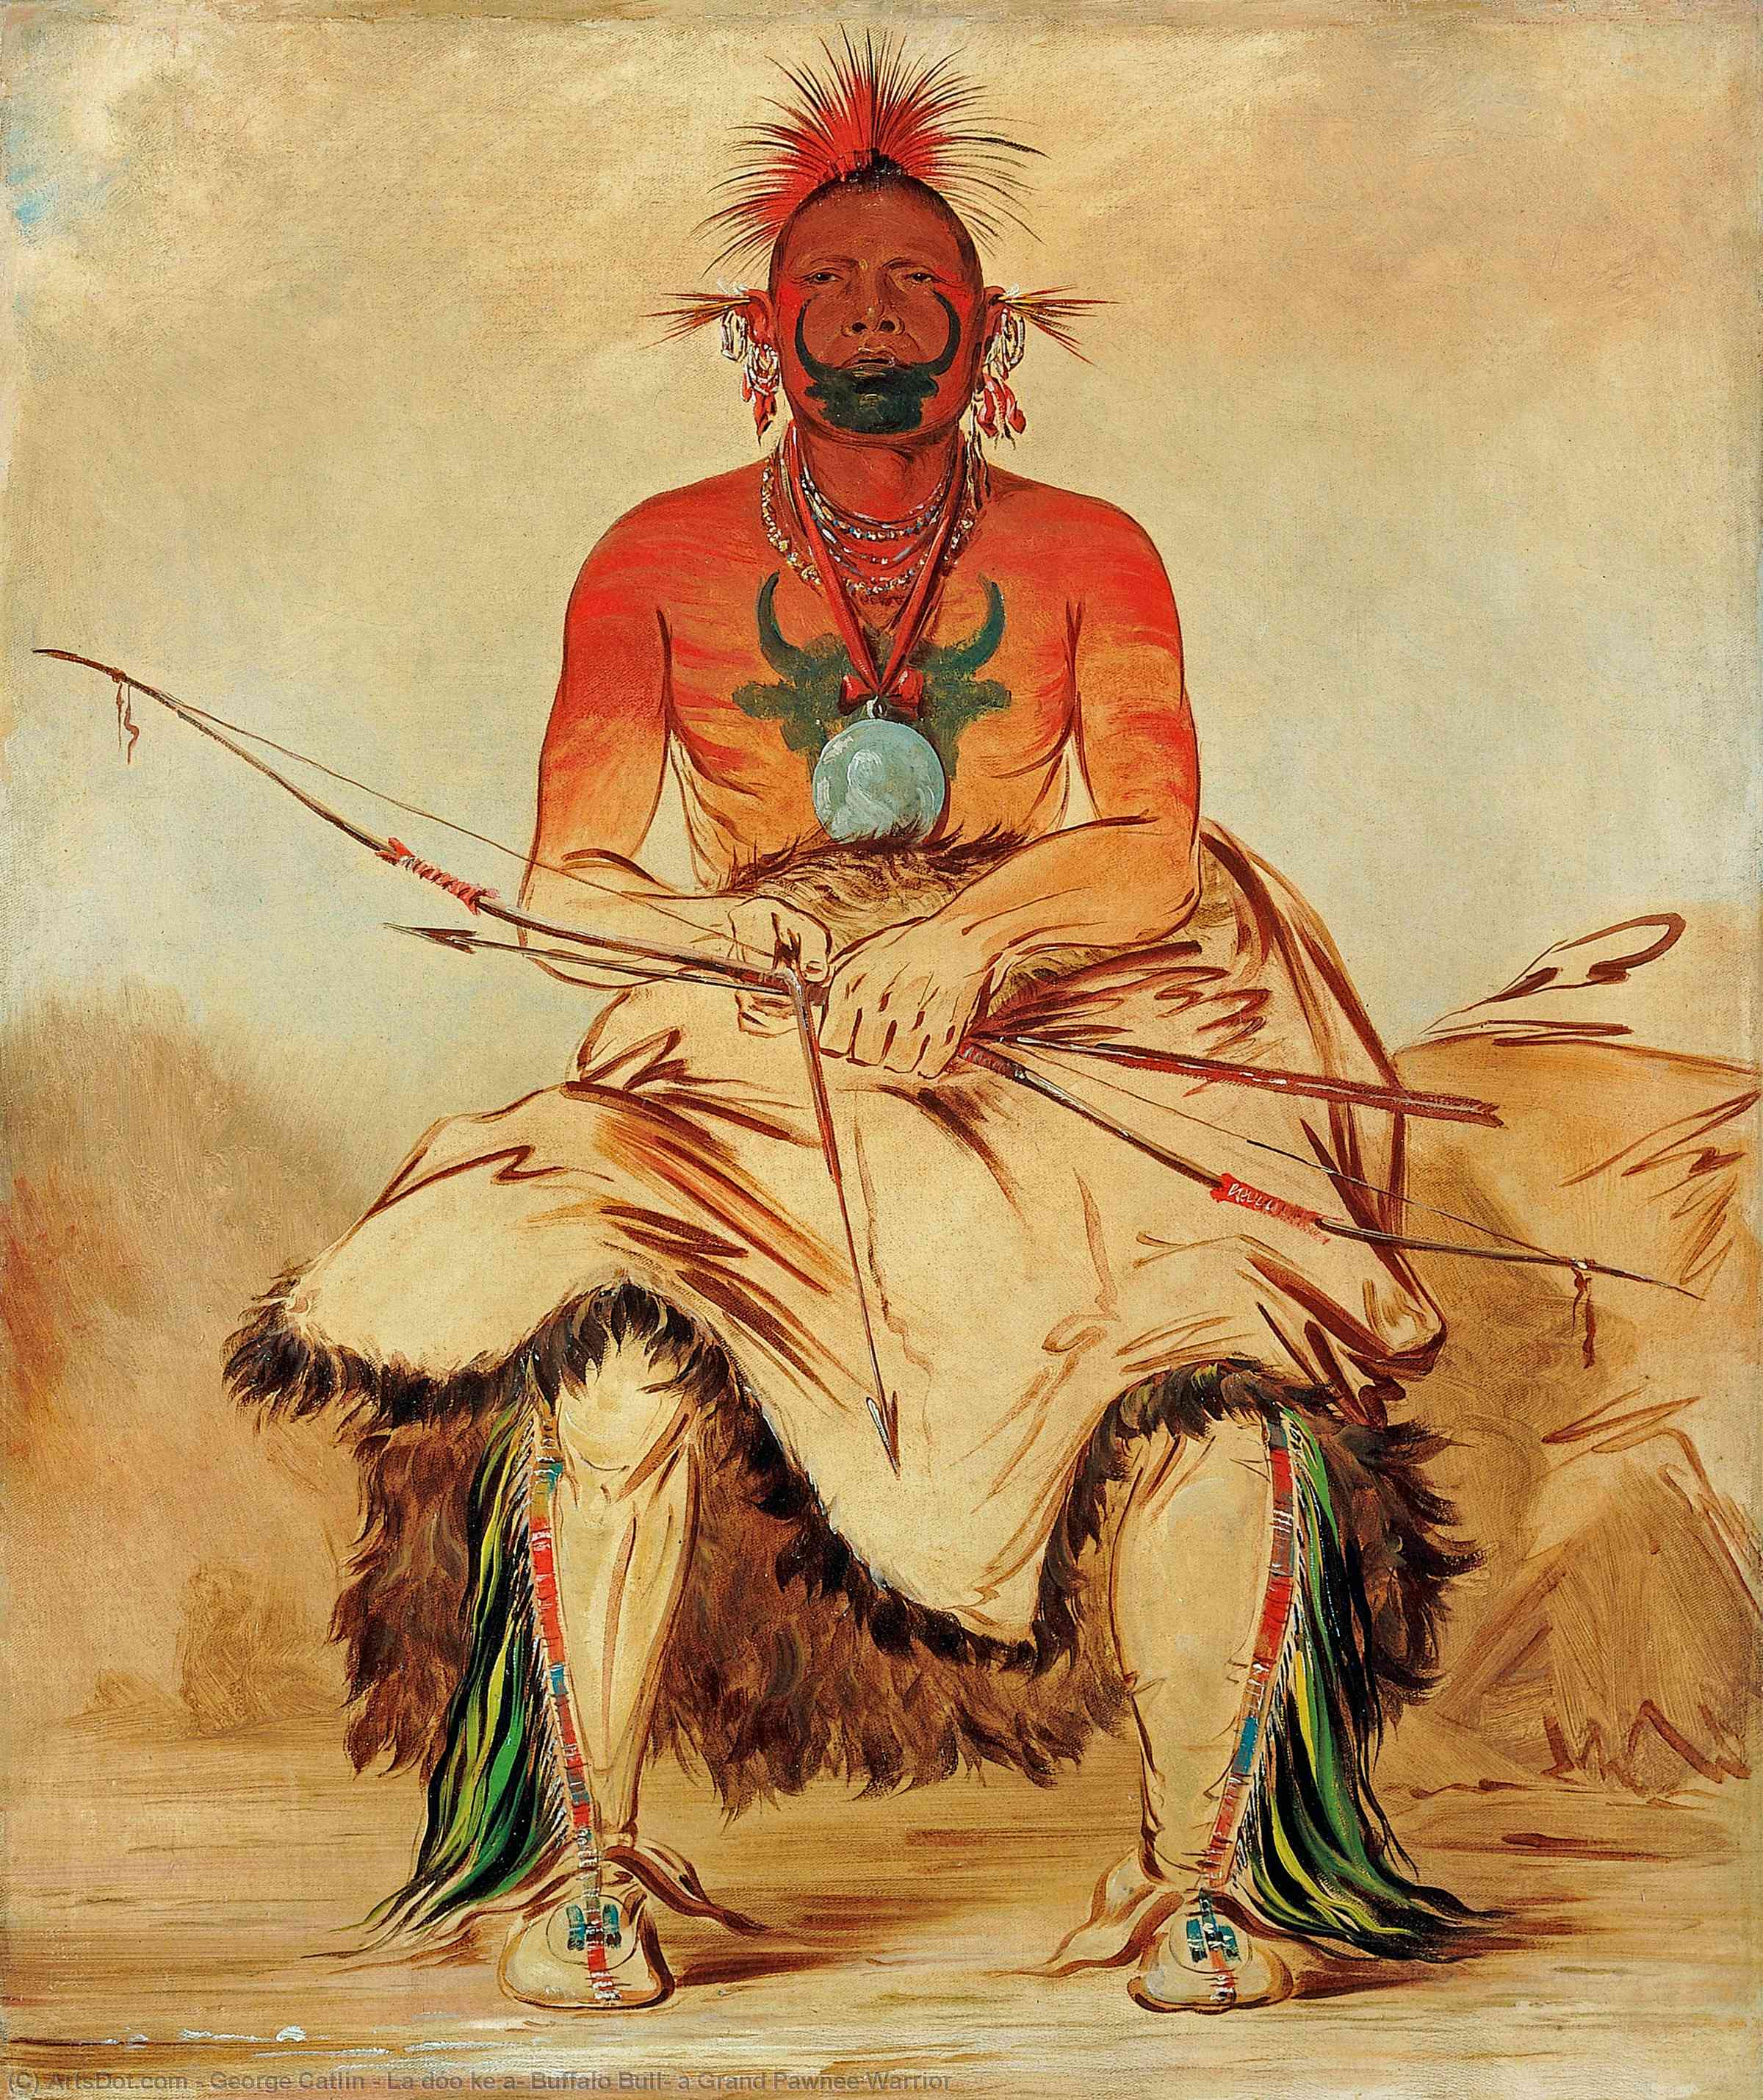 Wikioo.org - The Encyclopedia of Fine Arts - Painting, Artwork by George Catlin - La dóo ke a, Buffalo Bull, a Grand Pawnee Warrior